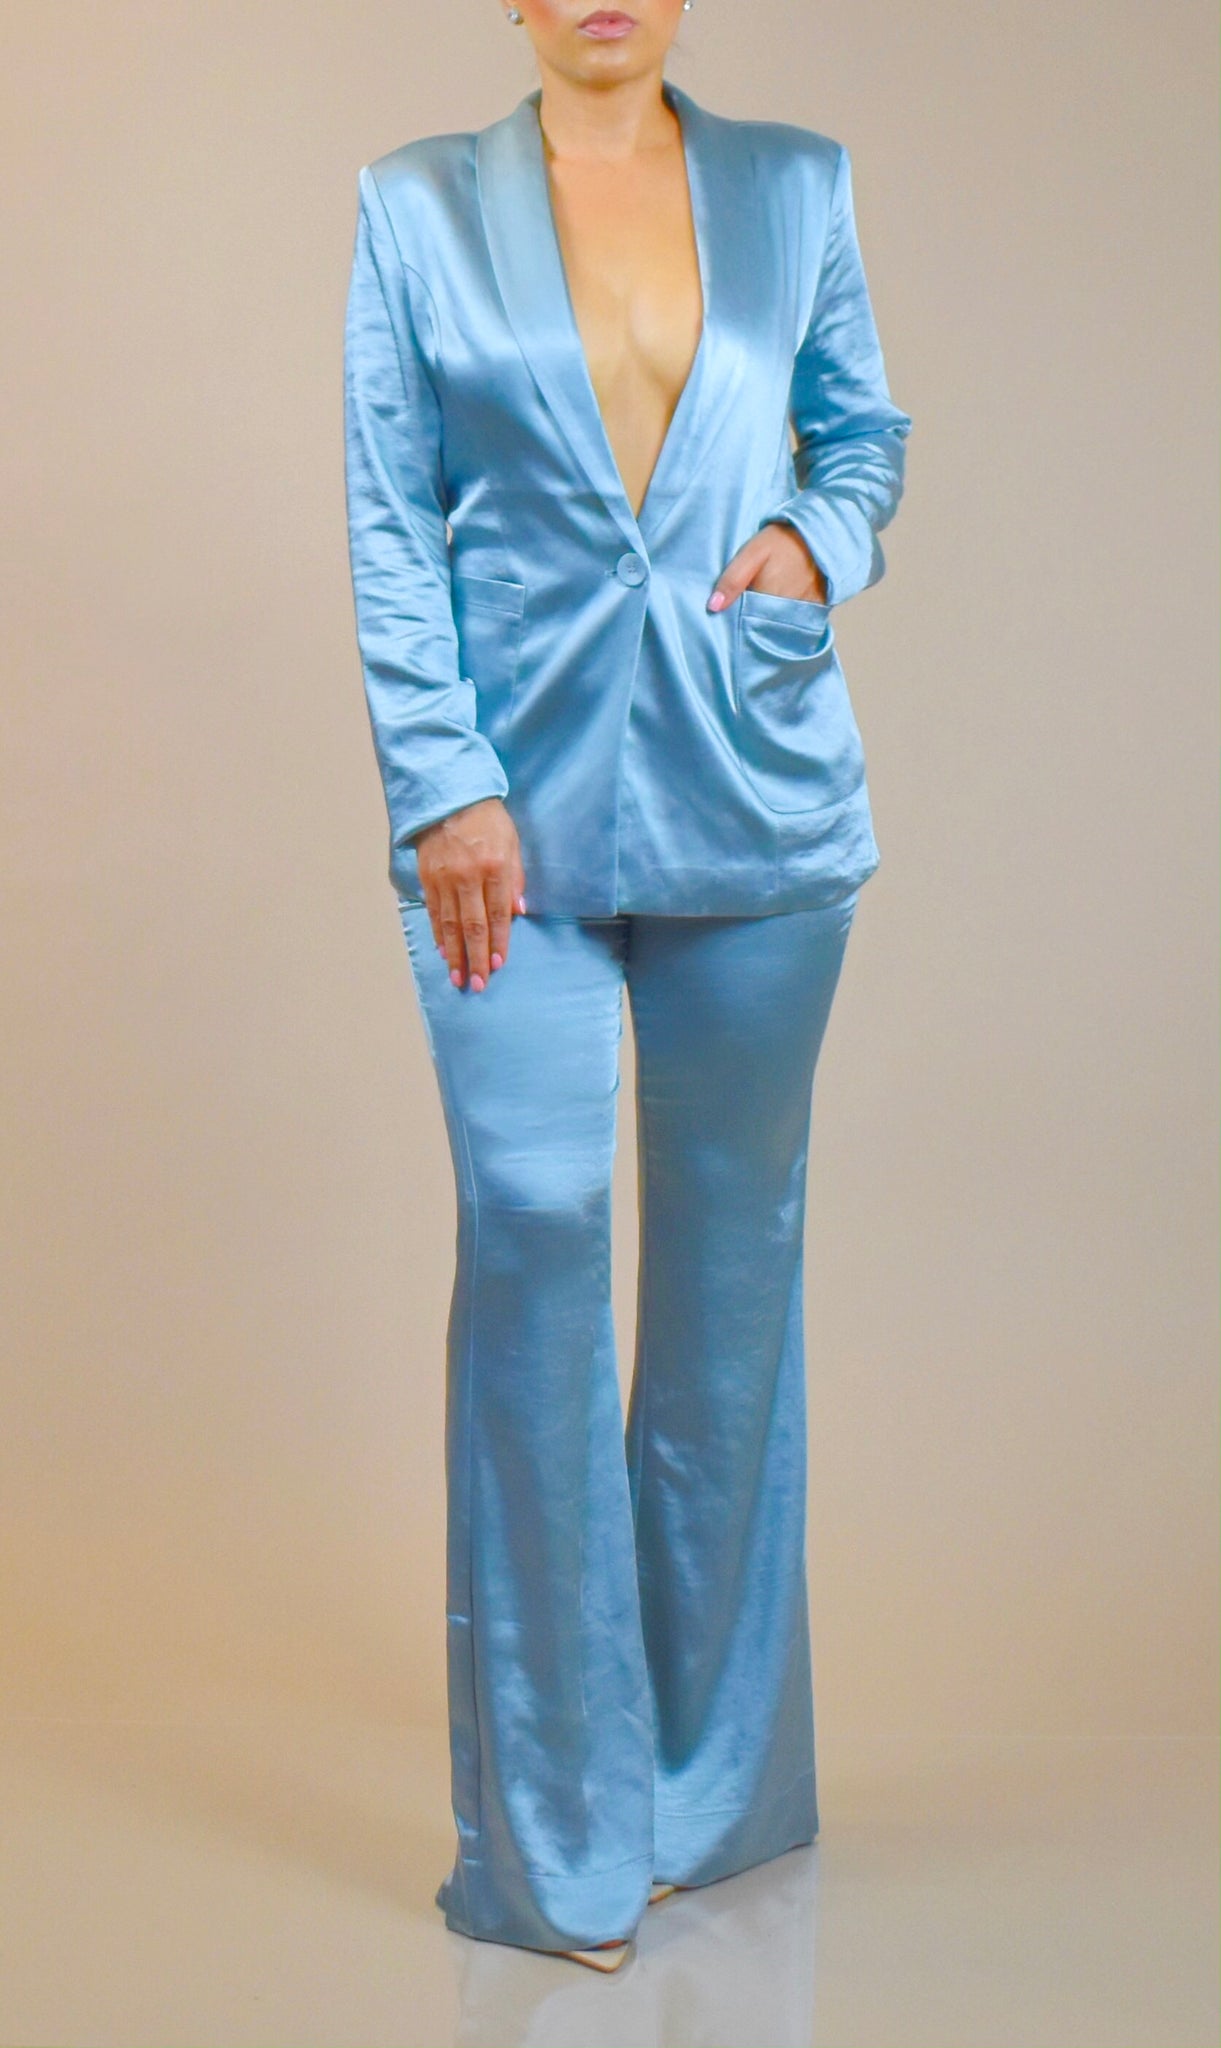 Lady Satin Faux Silk Suit Blazer Jacket Peplum Top Pants Set Business  Formal New | eBay